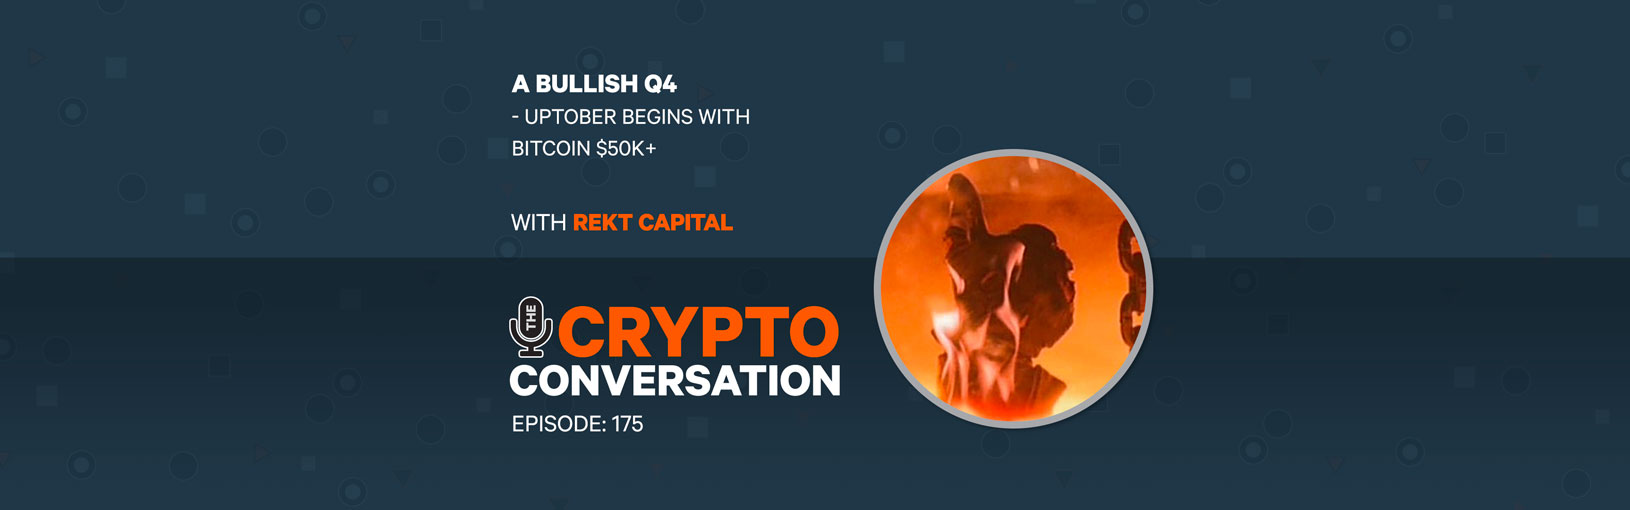 REKT Capital returns – A Bullish Q4 begins with Bitcoin $50k+